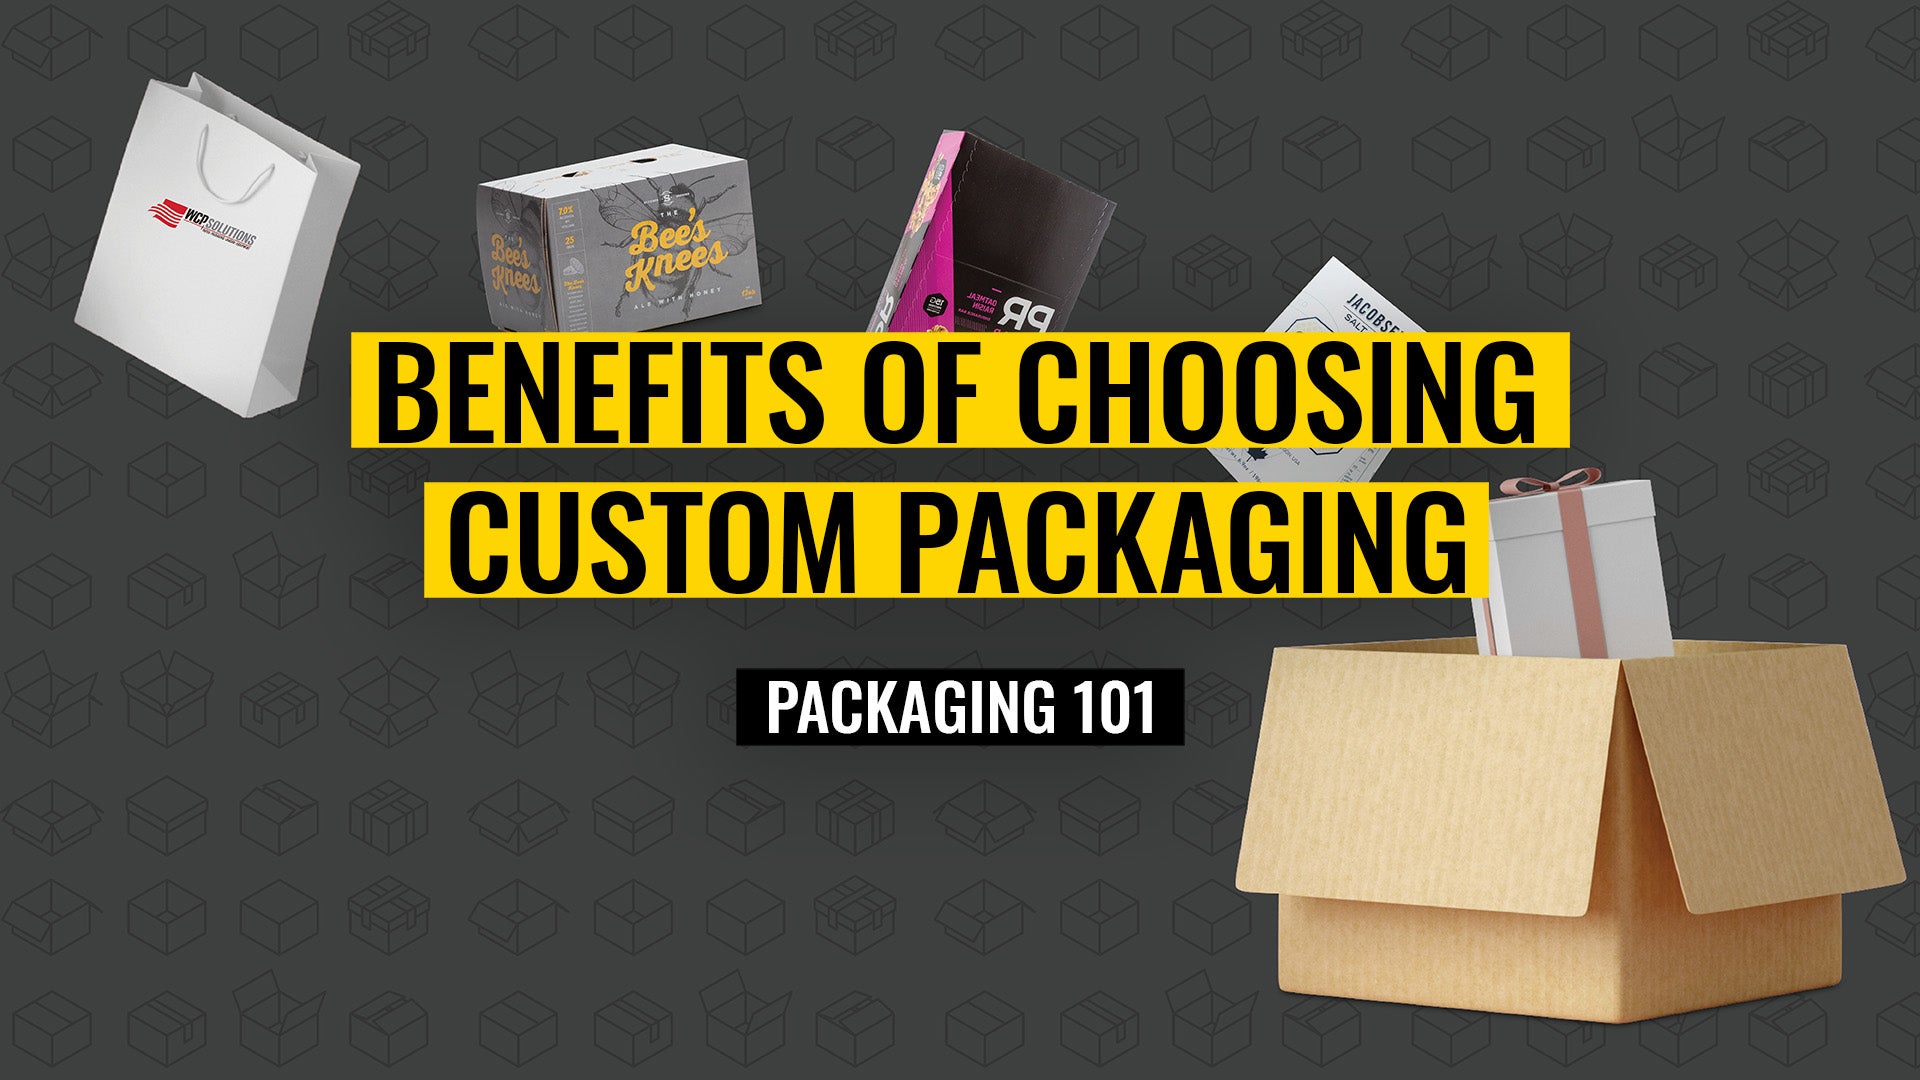 Benefits of Choosing Custom Packaging - Title - Multiple custom packaging boxes falling into a bigger kraft box